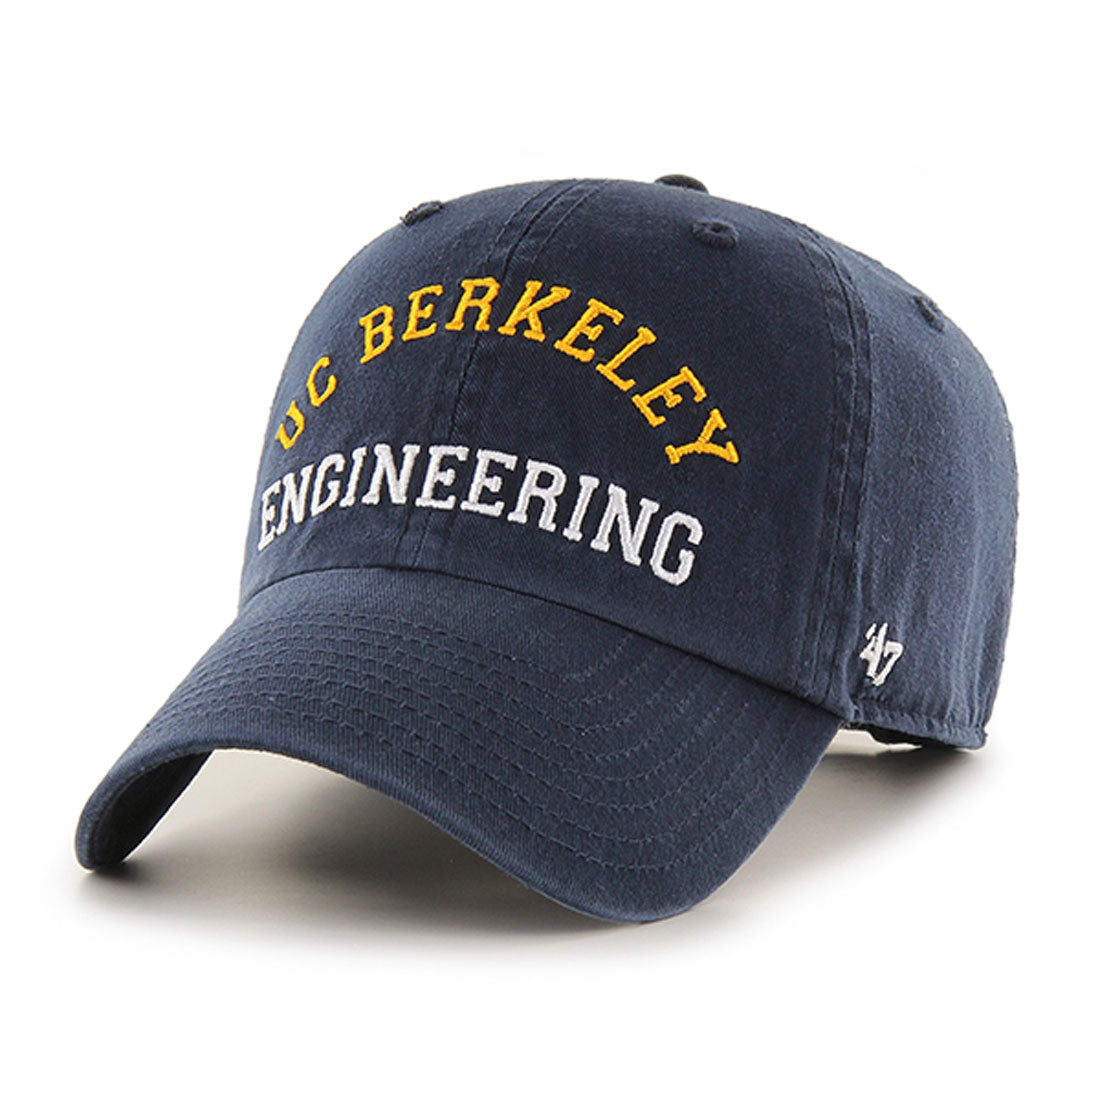 U.C. Berkeley Cal 47 Brand Engineering hat-Navy-Shop College Wear